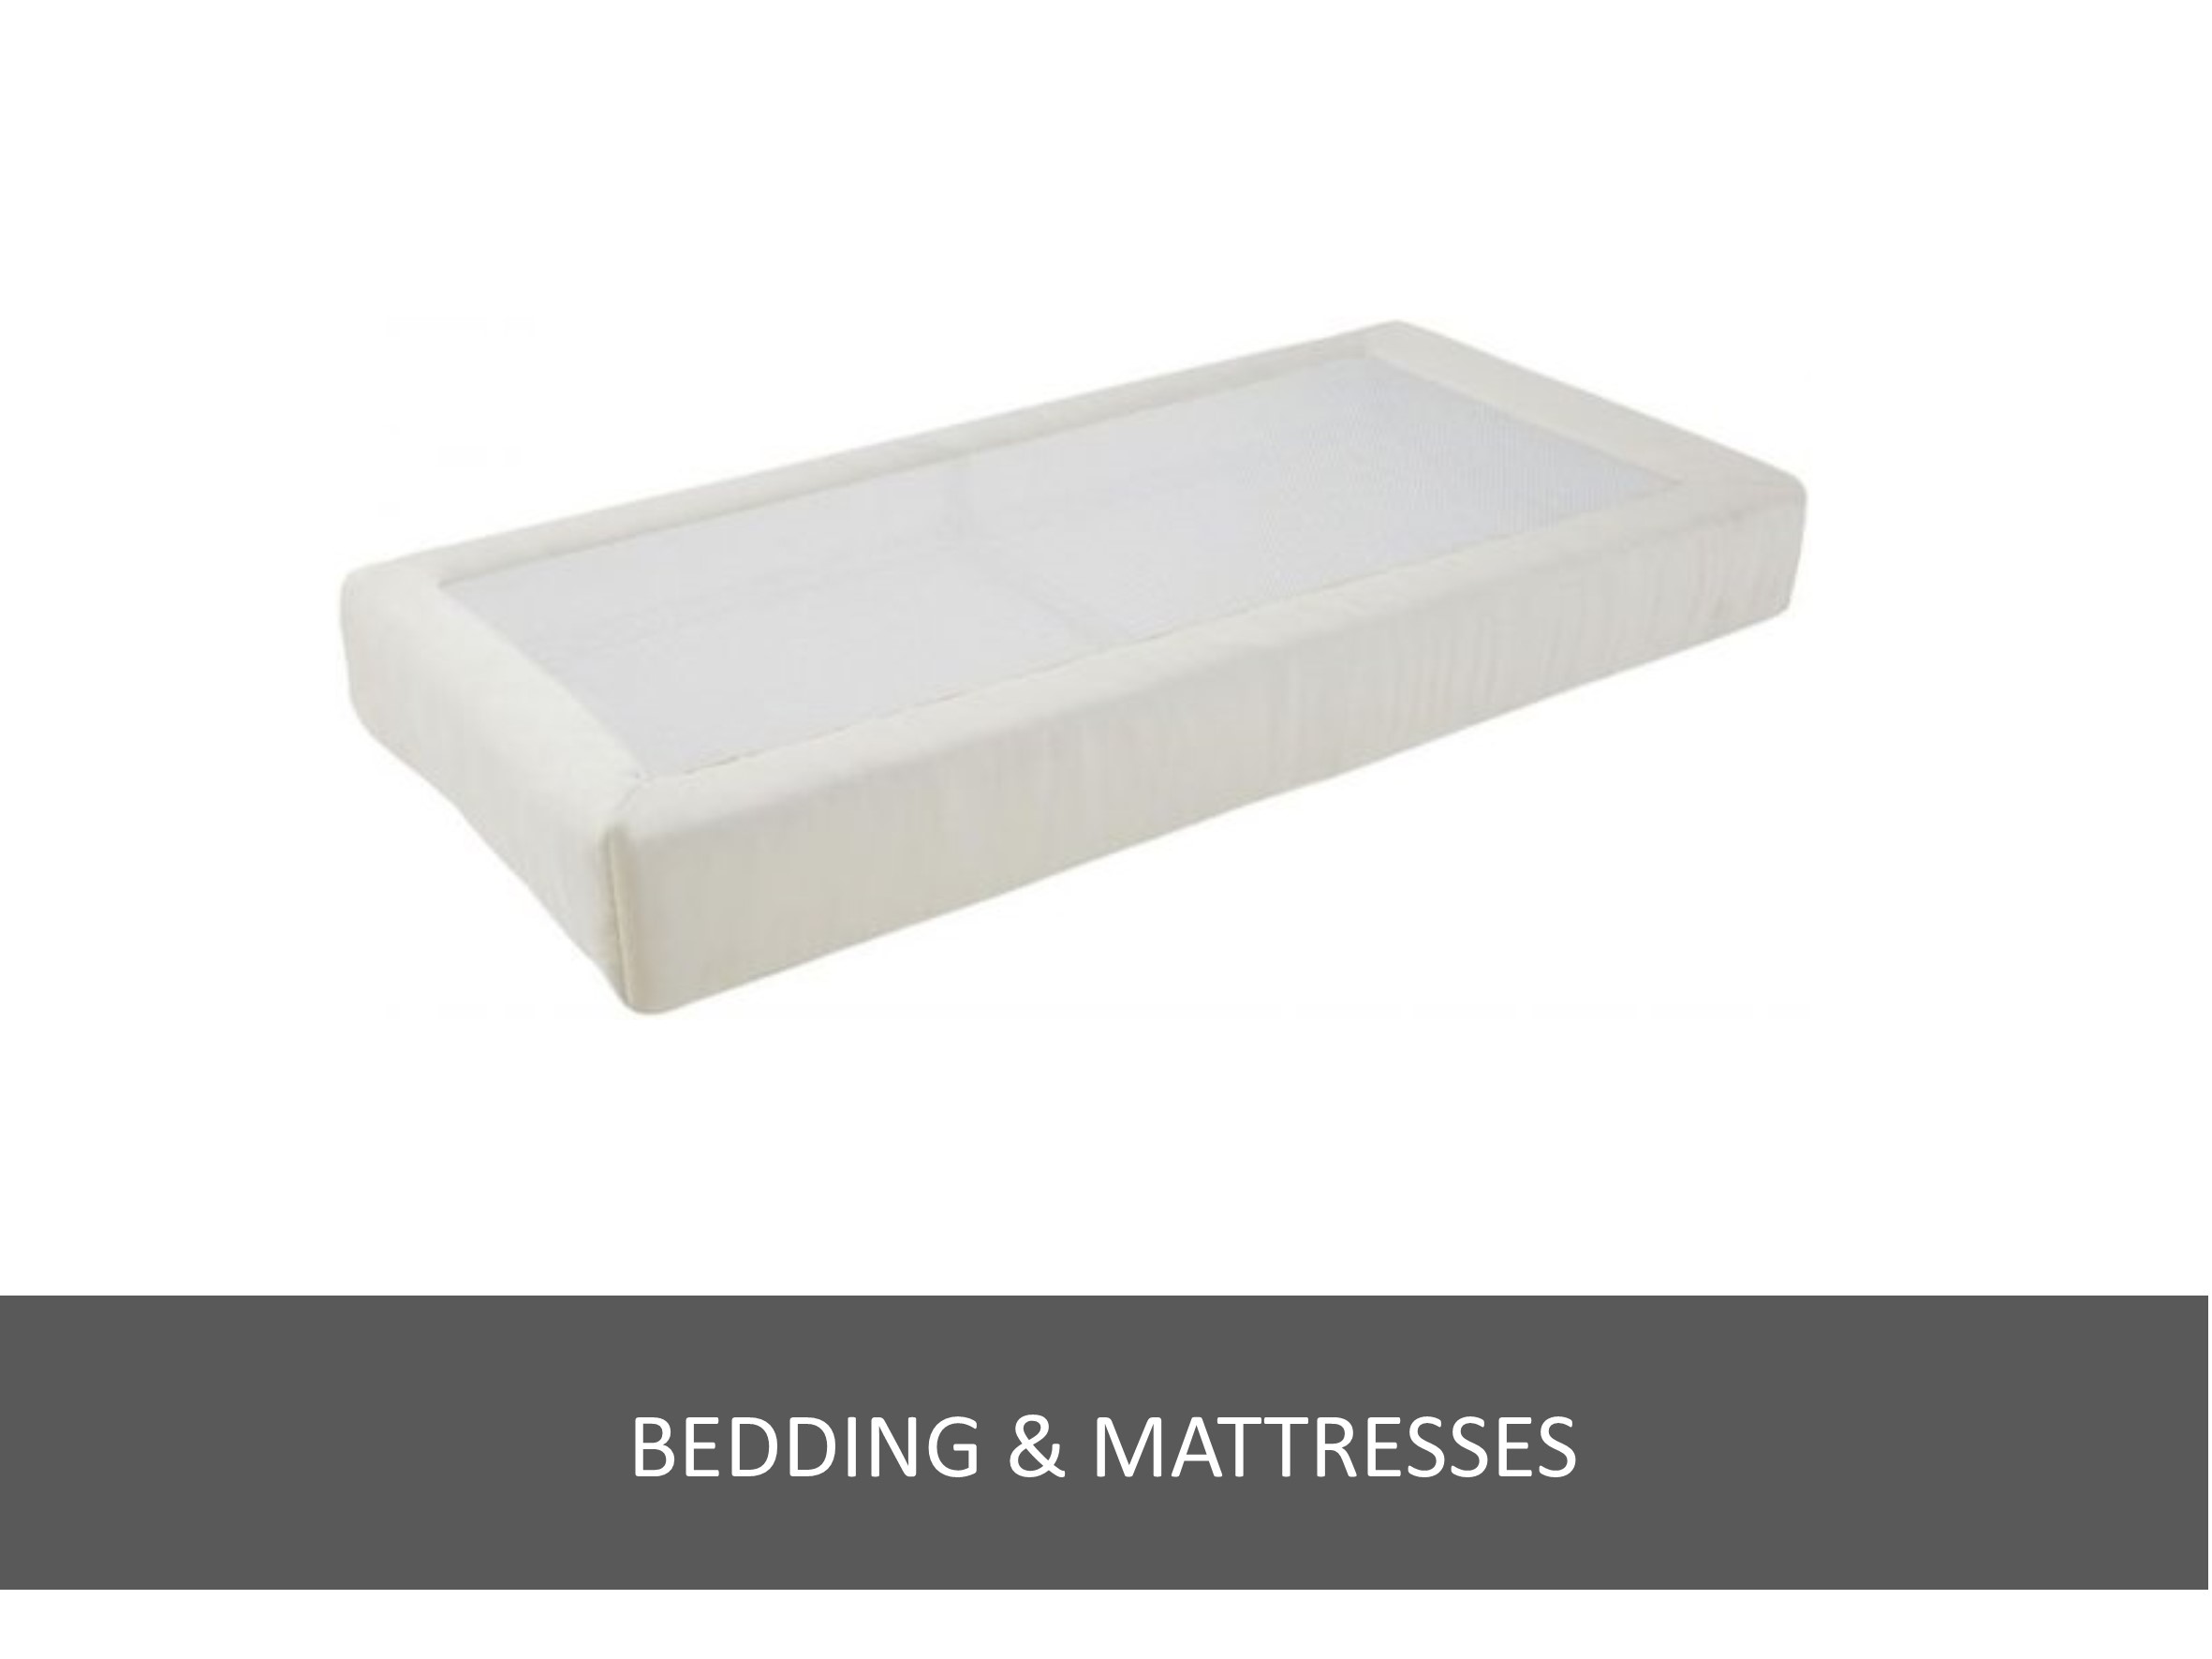 Bedding & mattresses